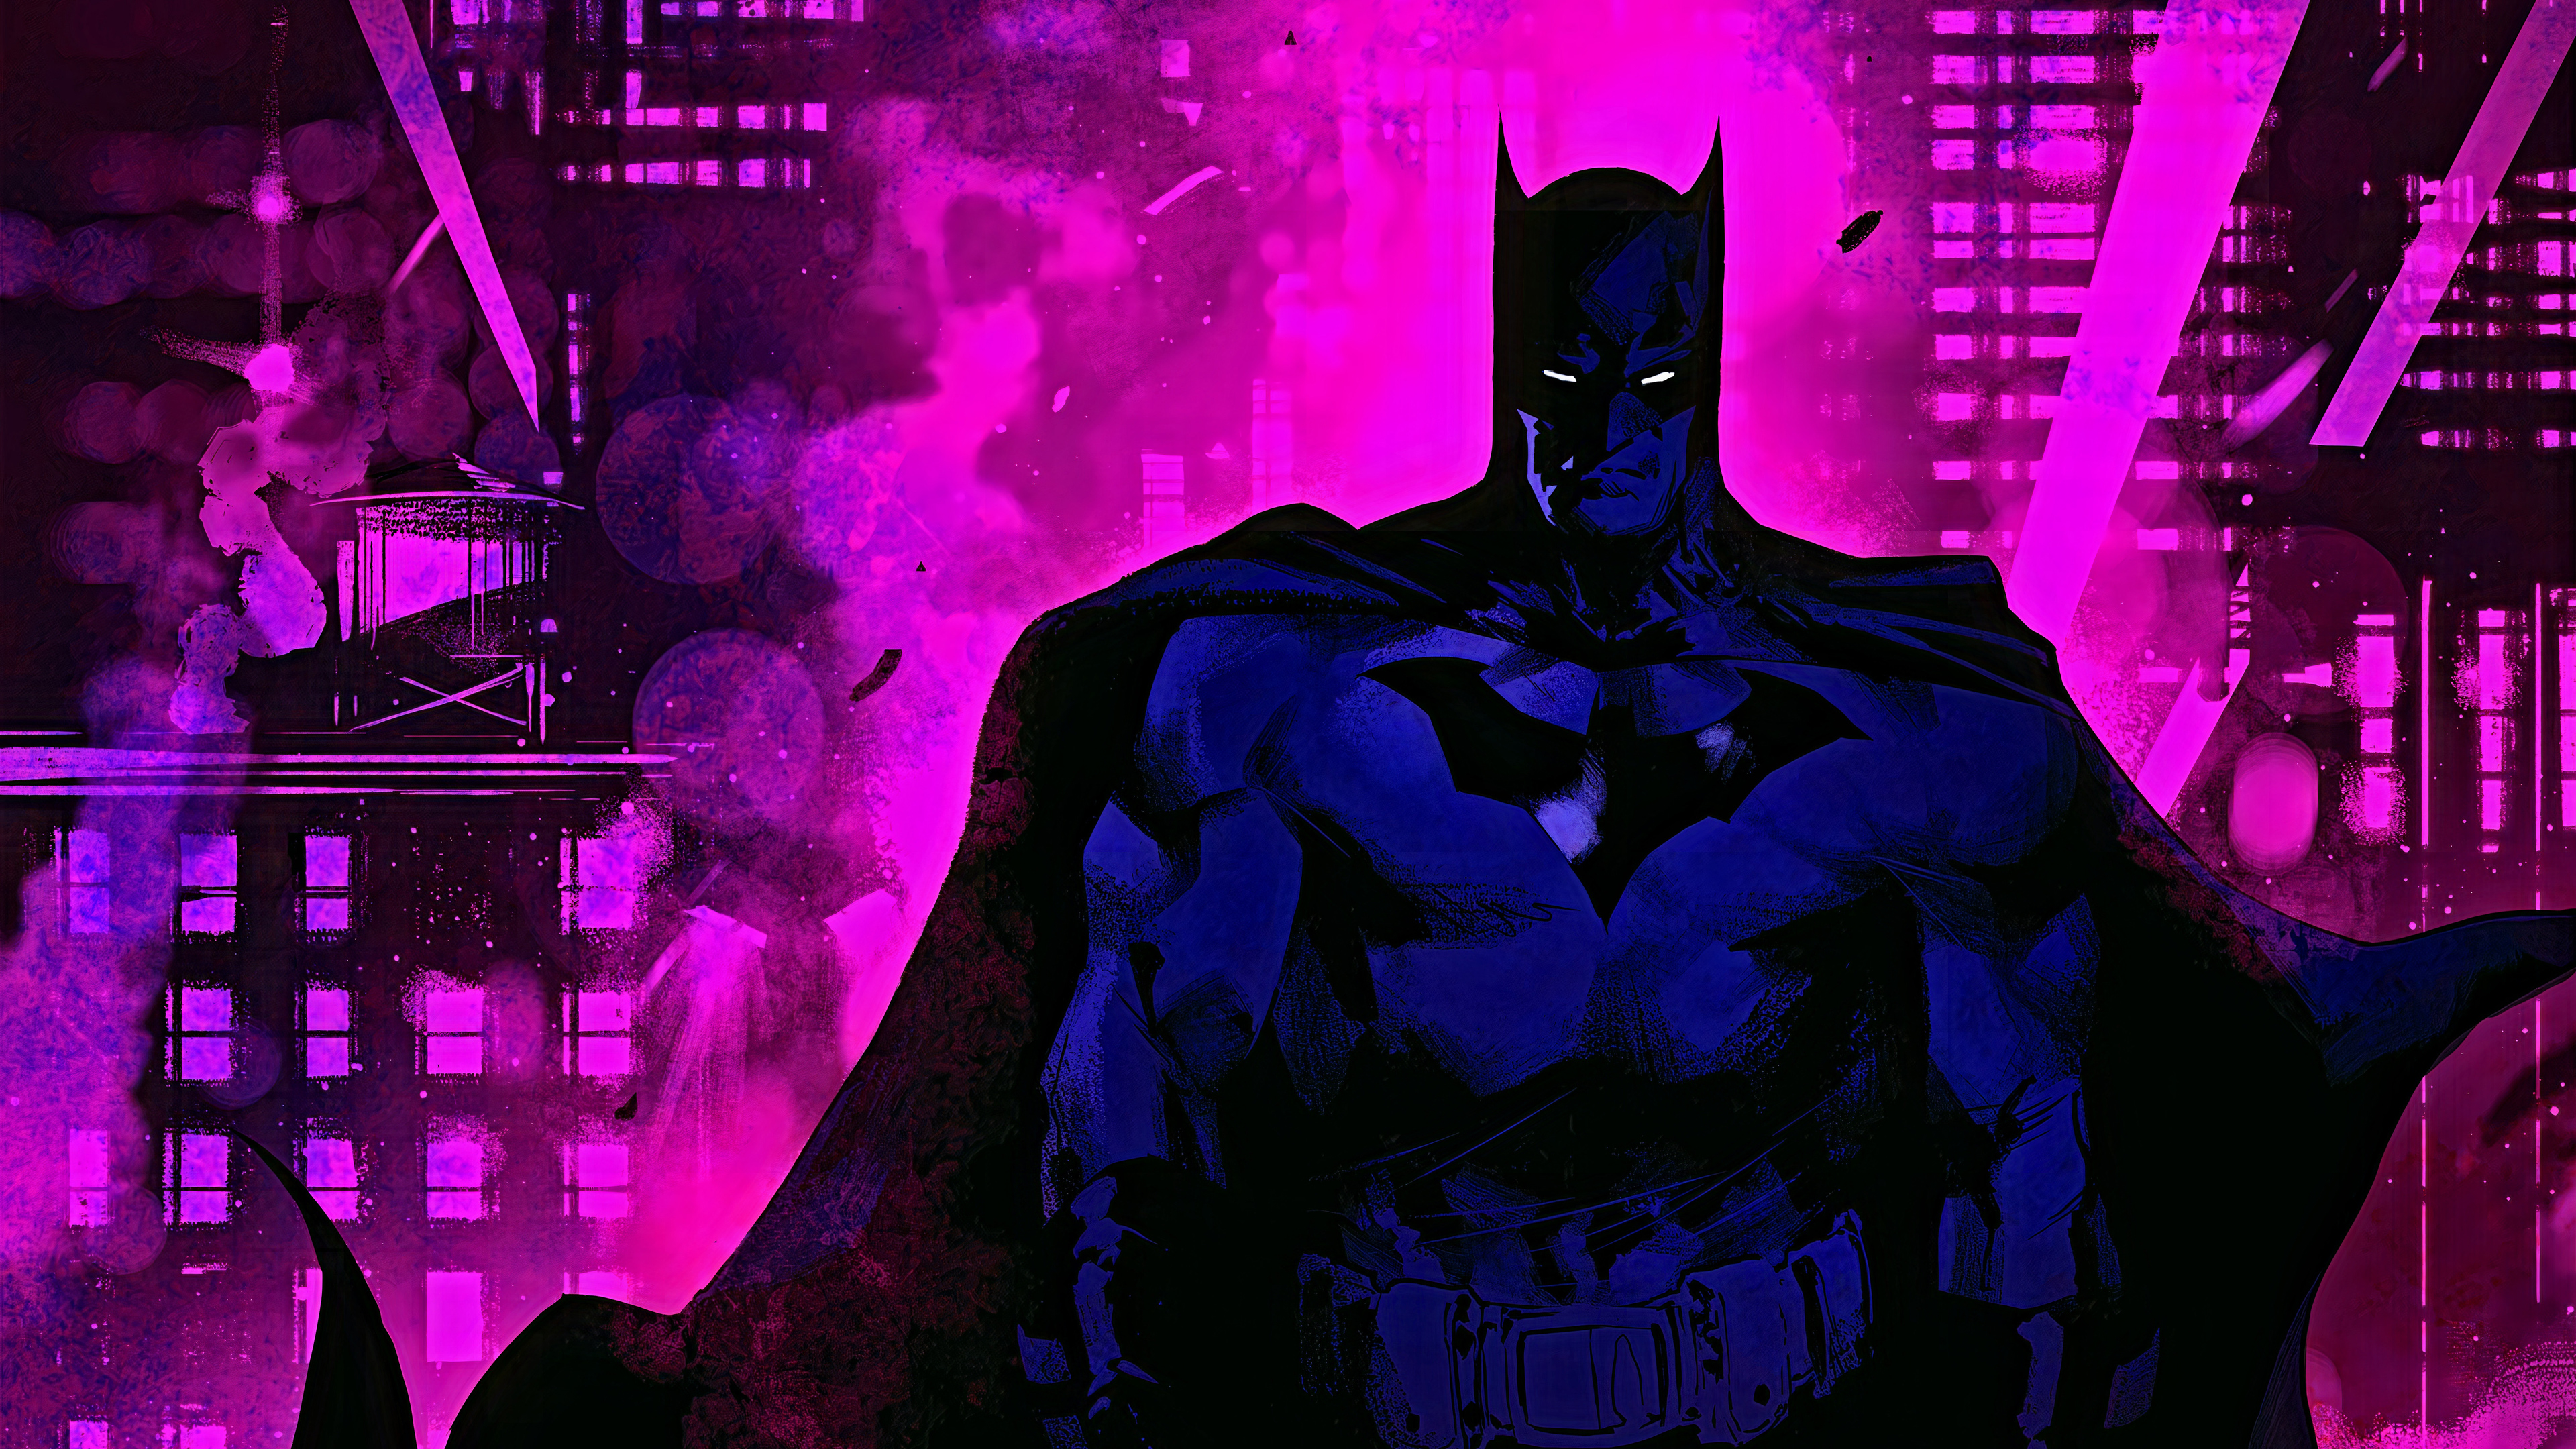 640x960 Resolution Batman Cool The Dark Knight iPhone 4, iPhone 4S Wallpaper  - Wallpapers Den